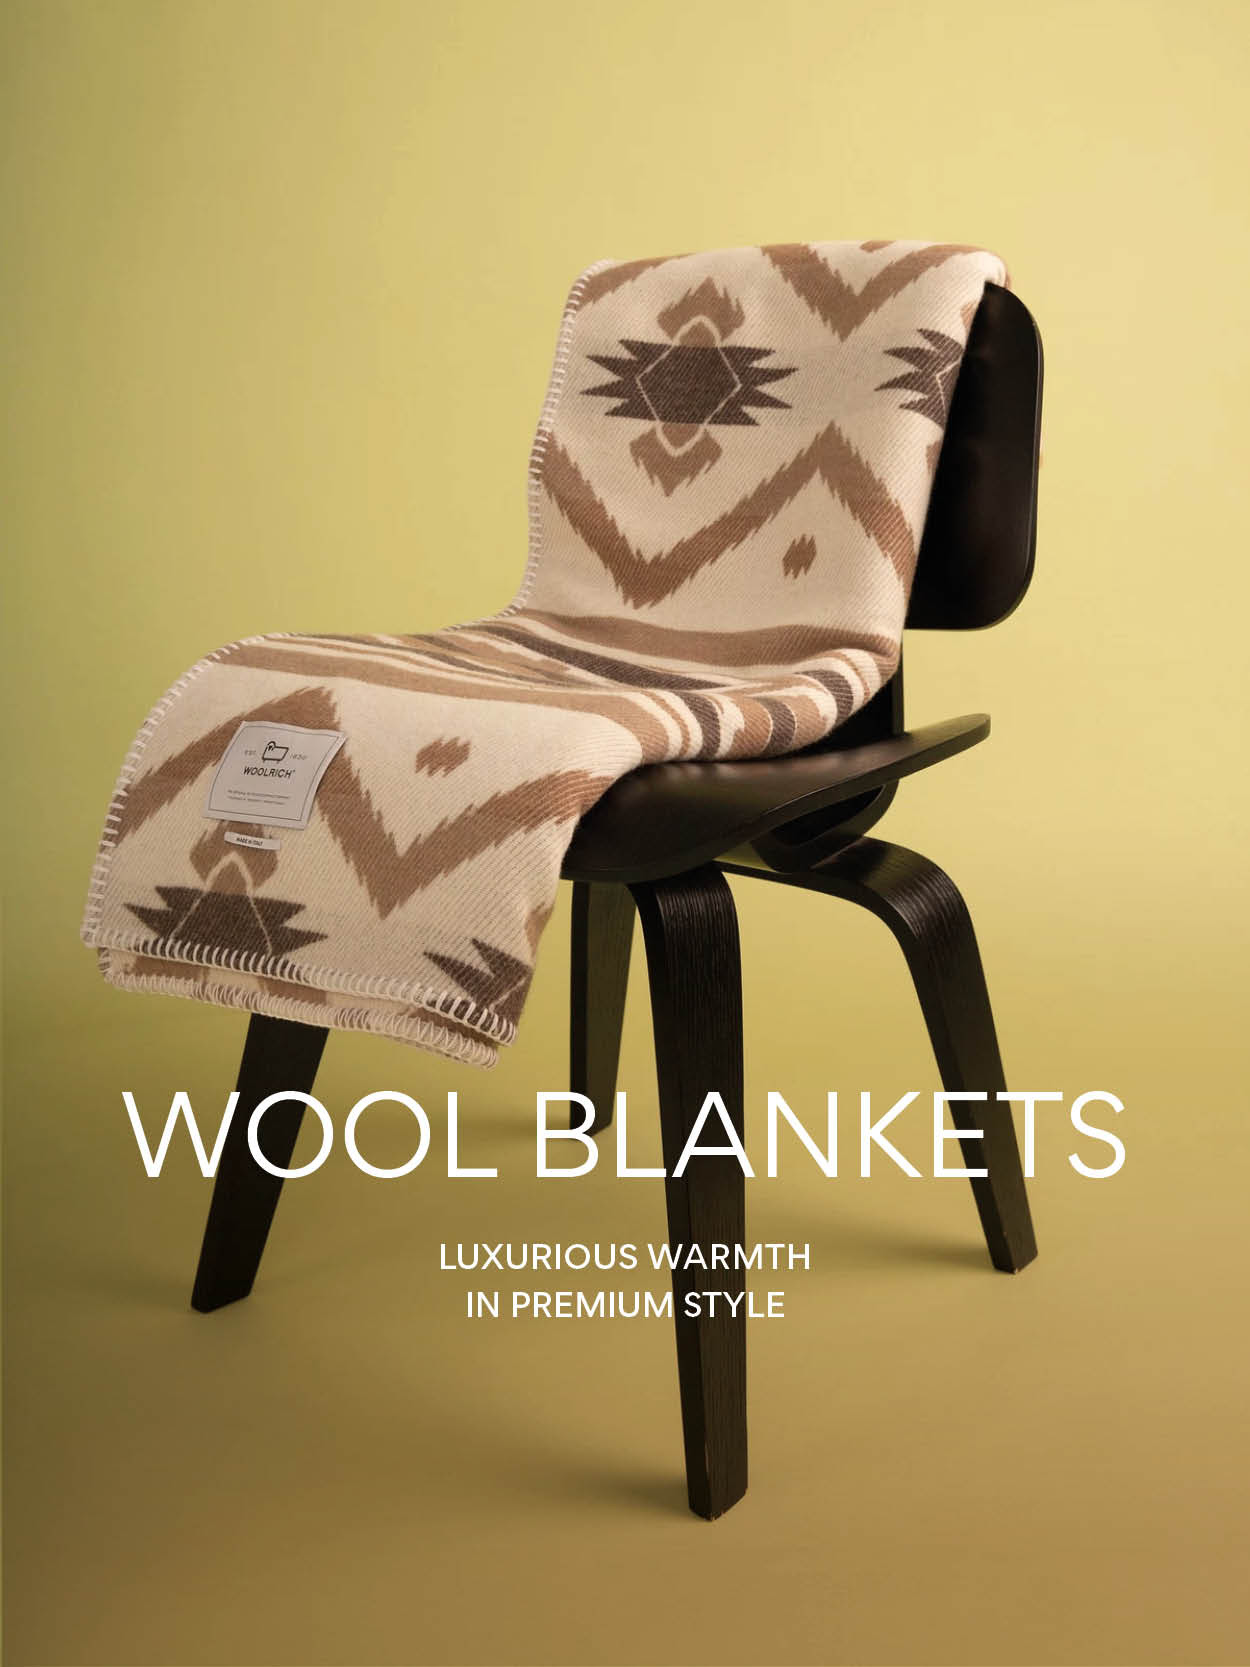 Wool Blankets. Luxurious warmth in premium style